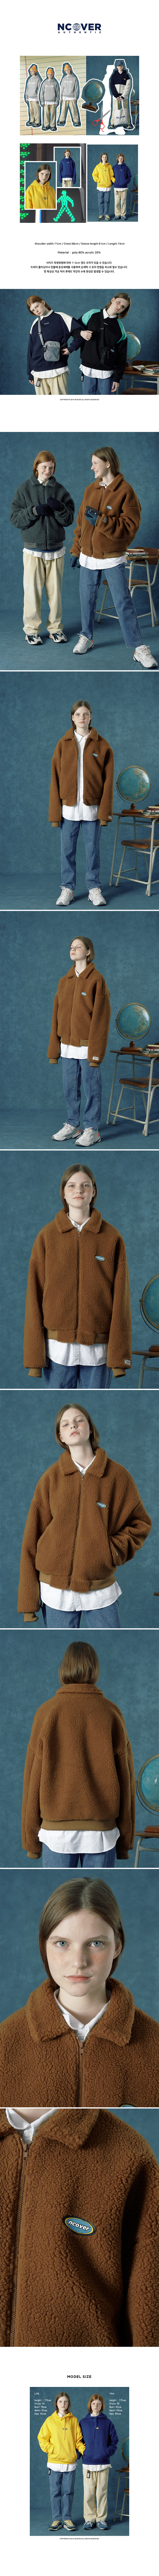 Ncover fleece jacket-camel.jpg